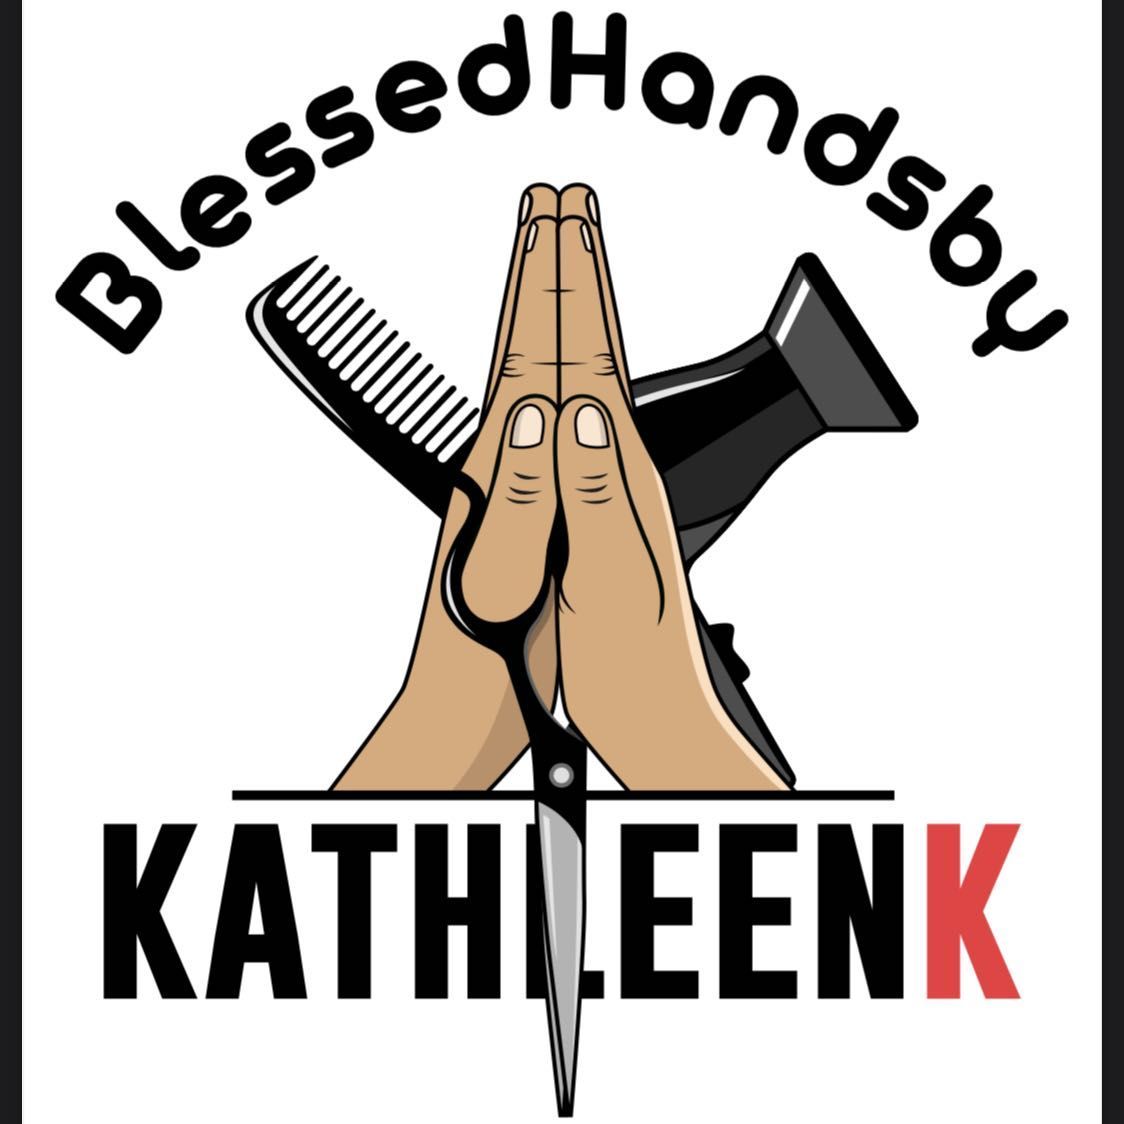 BlessedHands by Kathleen K, 212 N Oak St, Roanoke, 76262